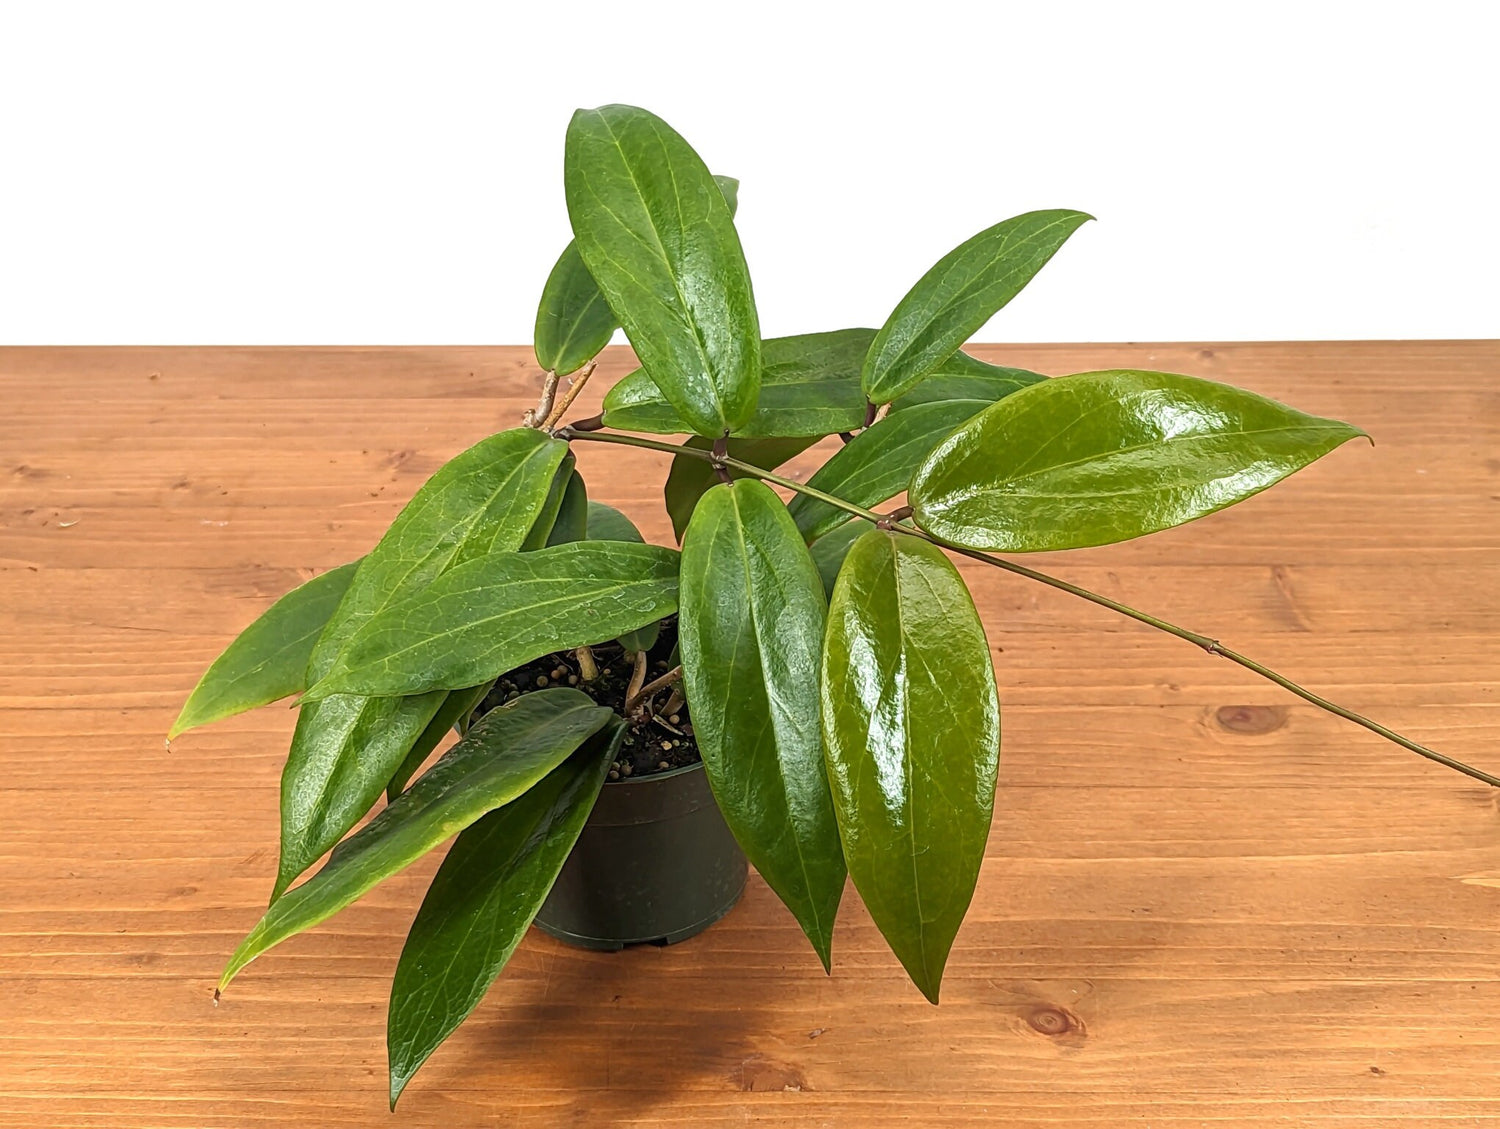 Hoya ilagiorum in 4 inch pot